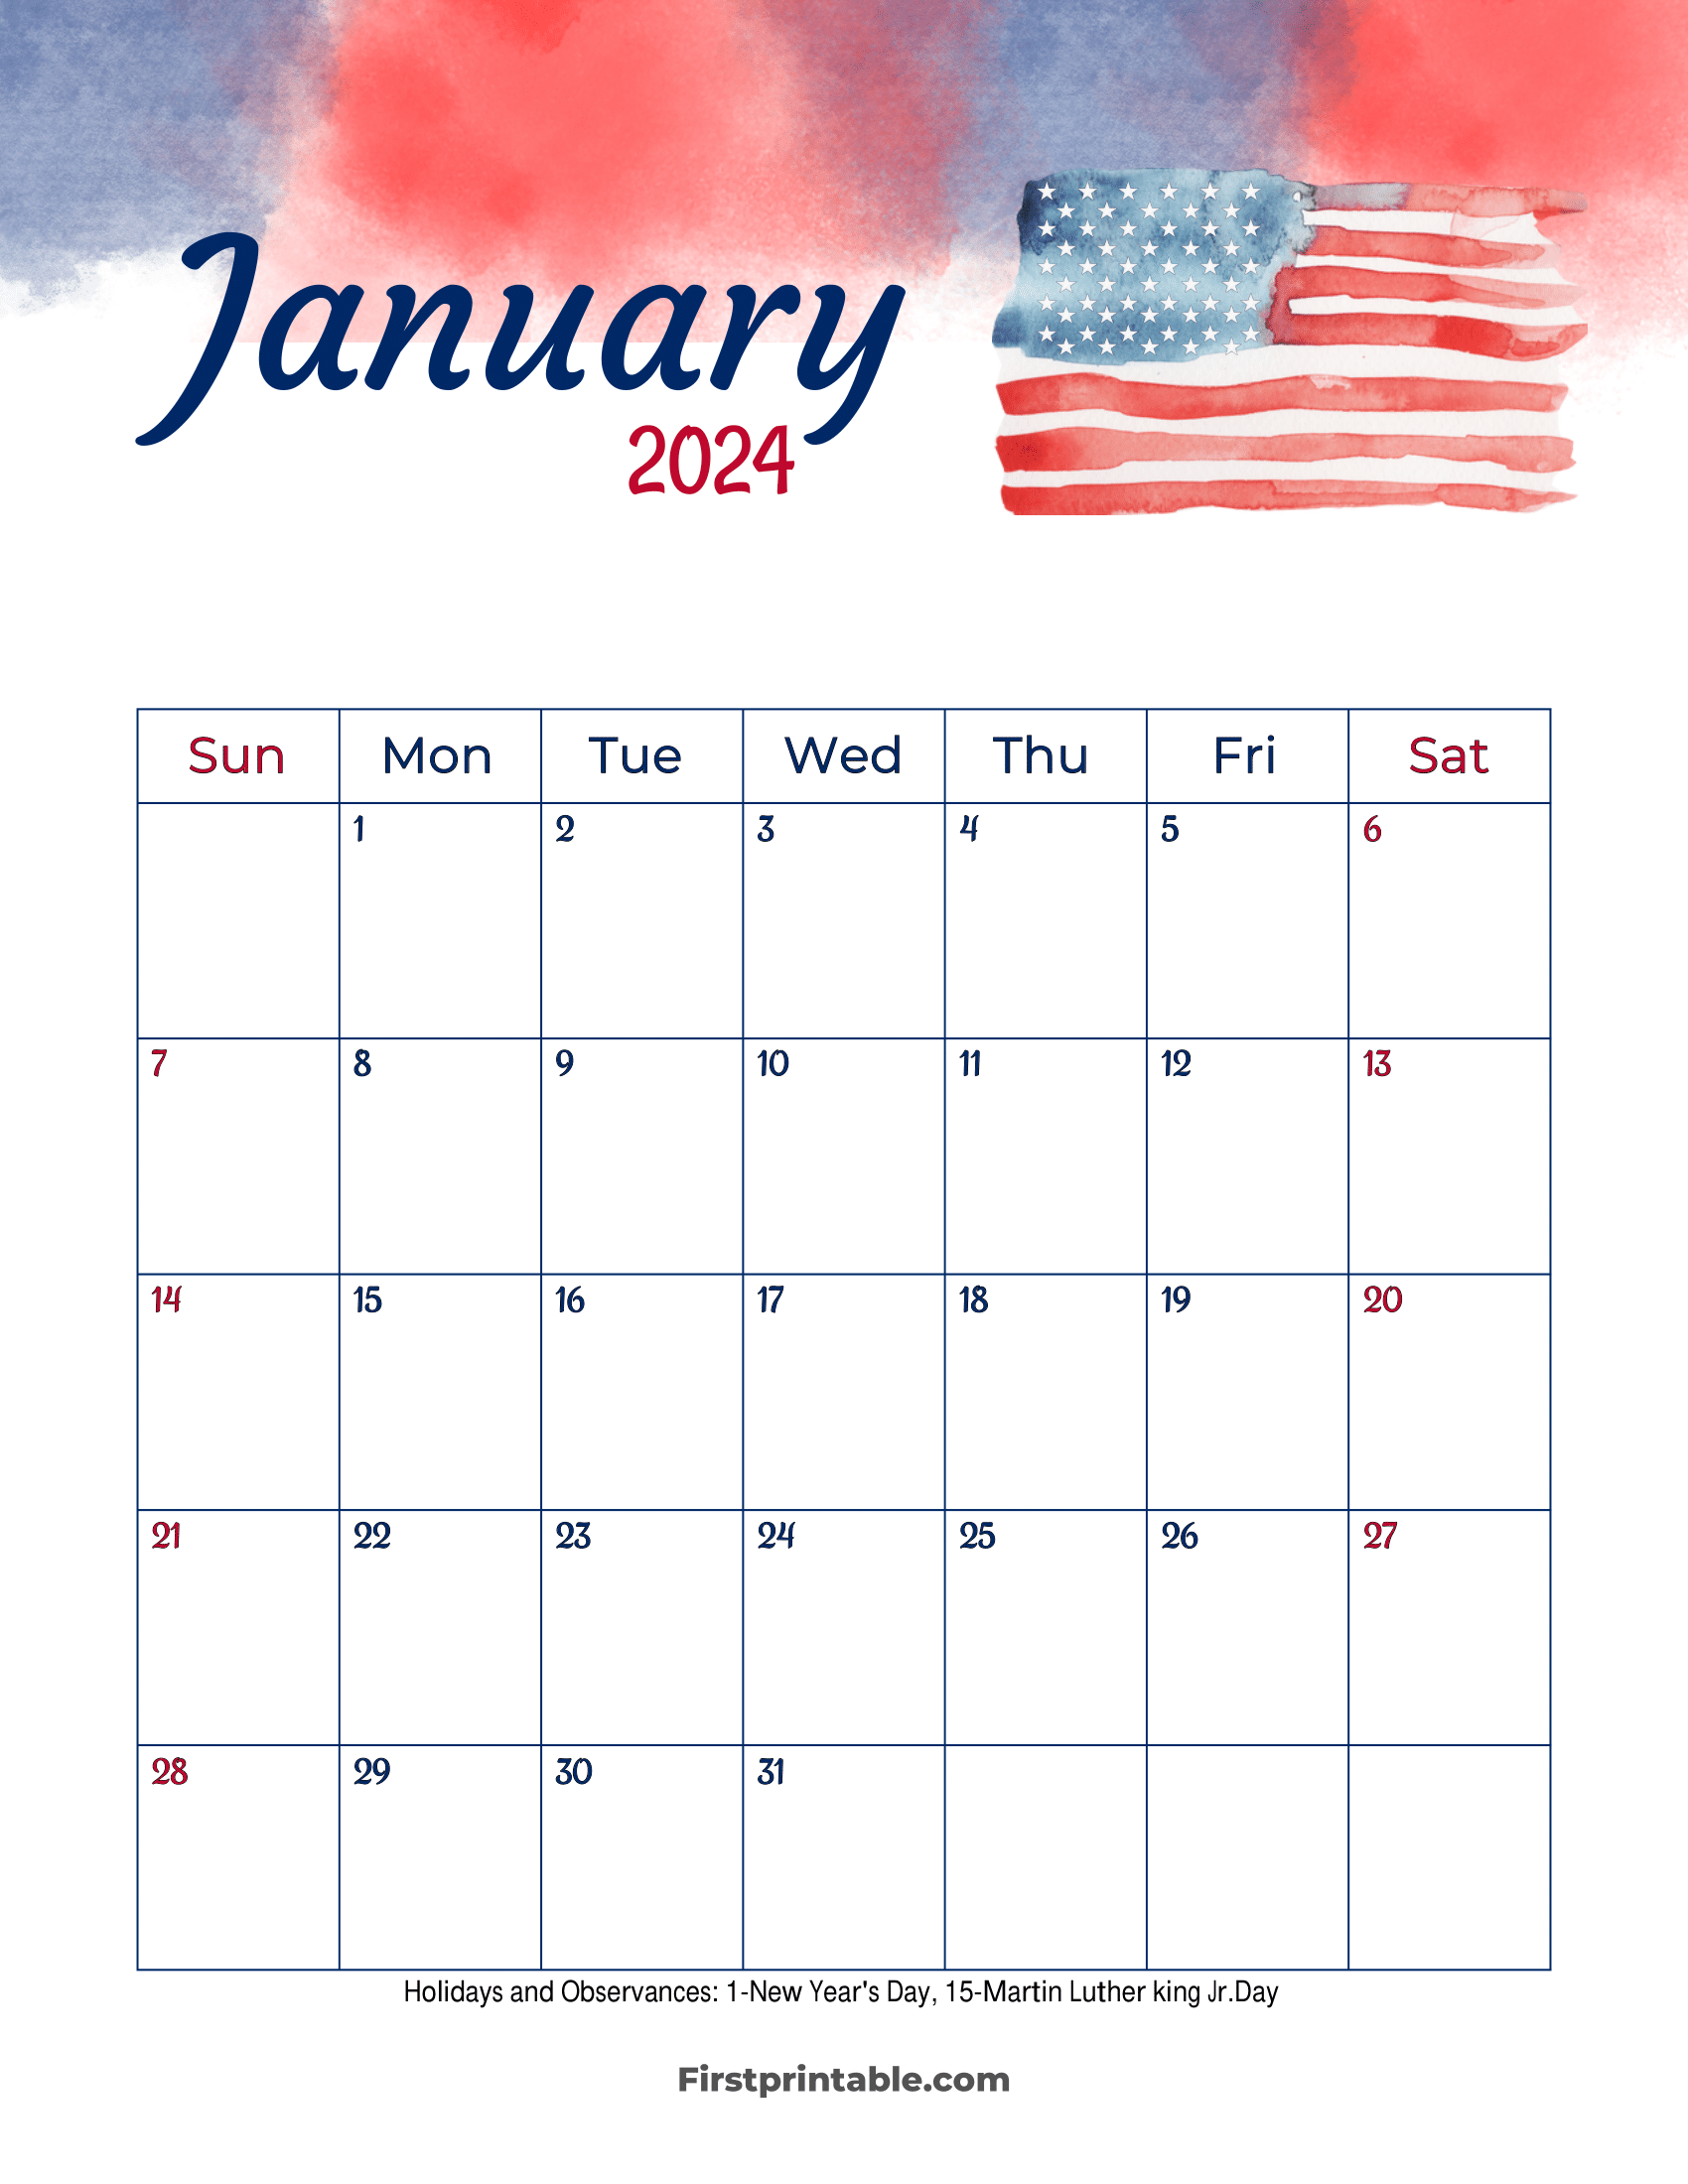 January Calendar 2024 Printable & Fillable with US Holidays